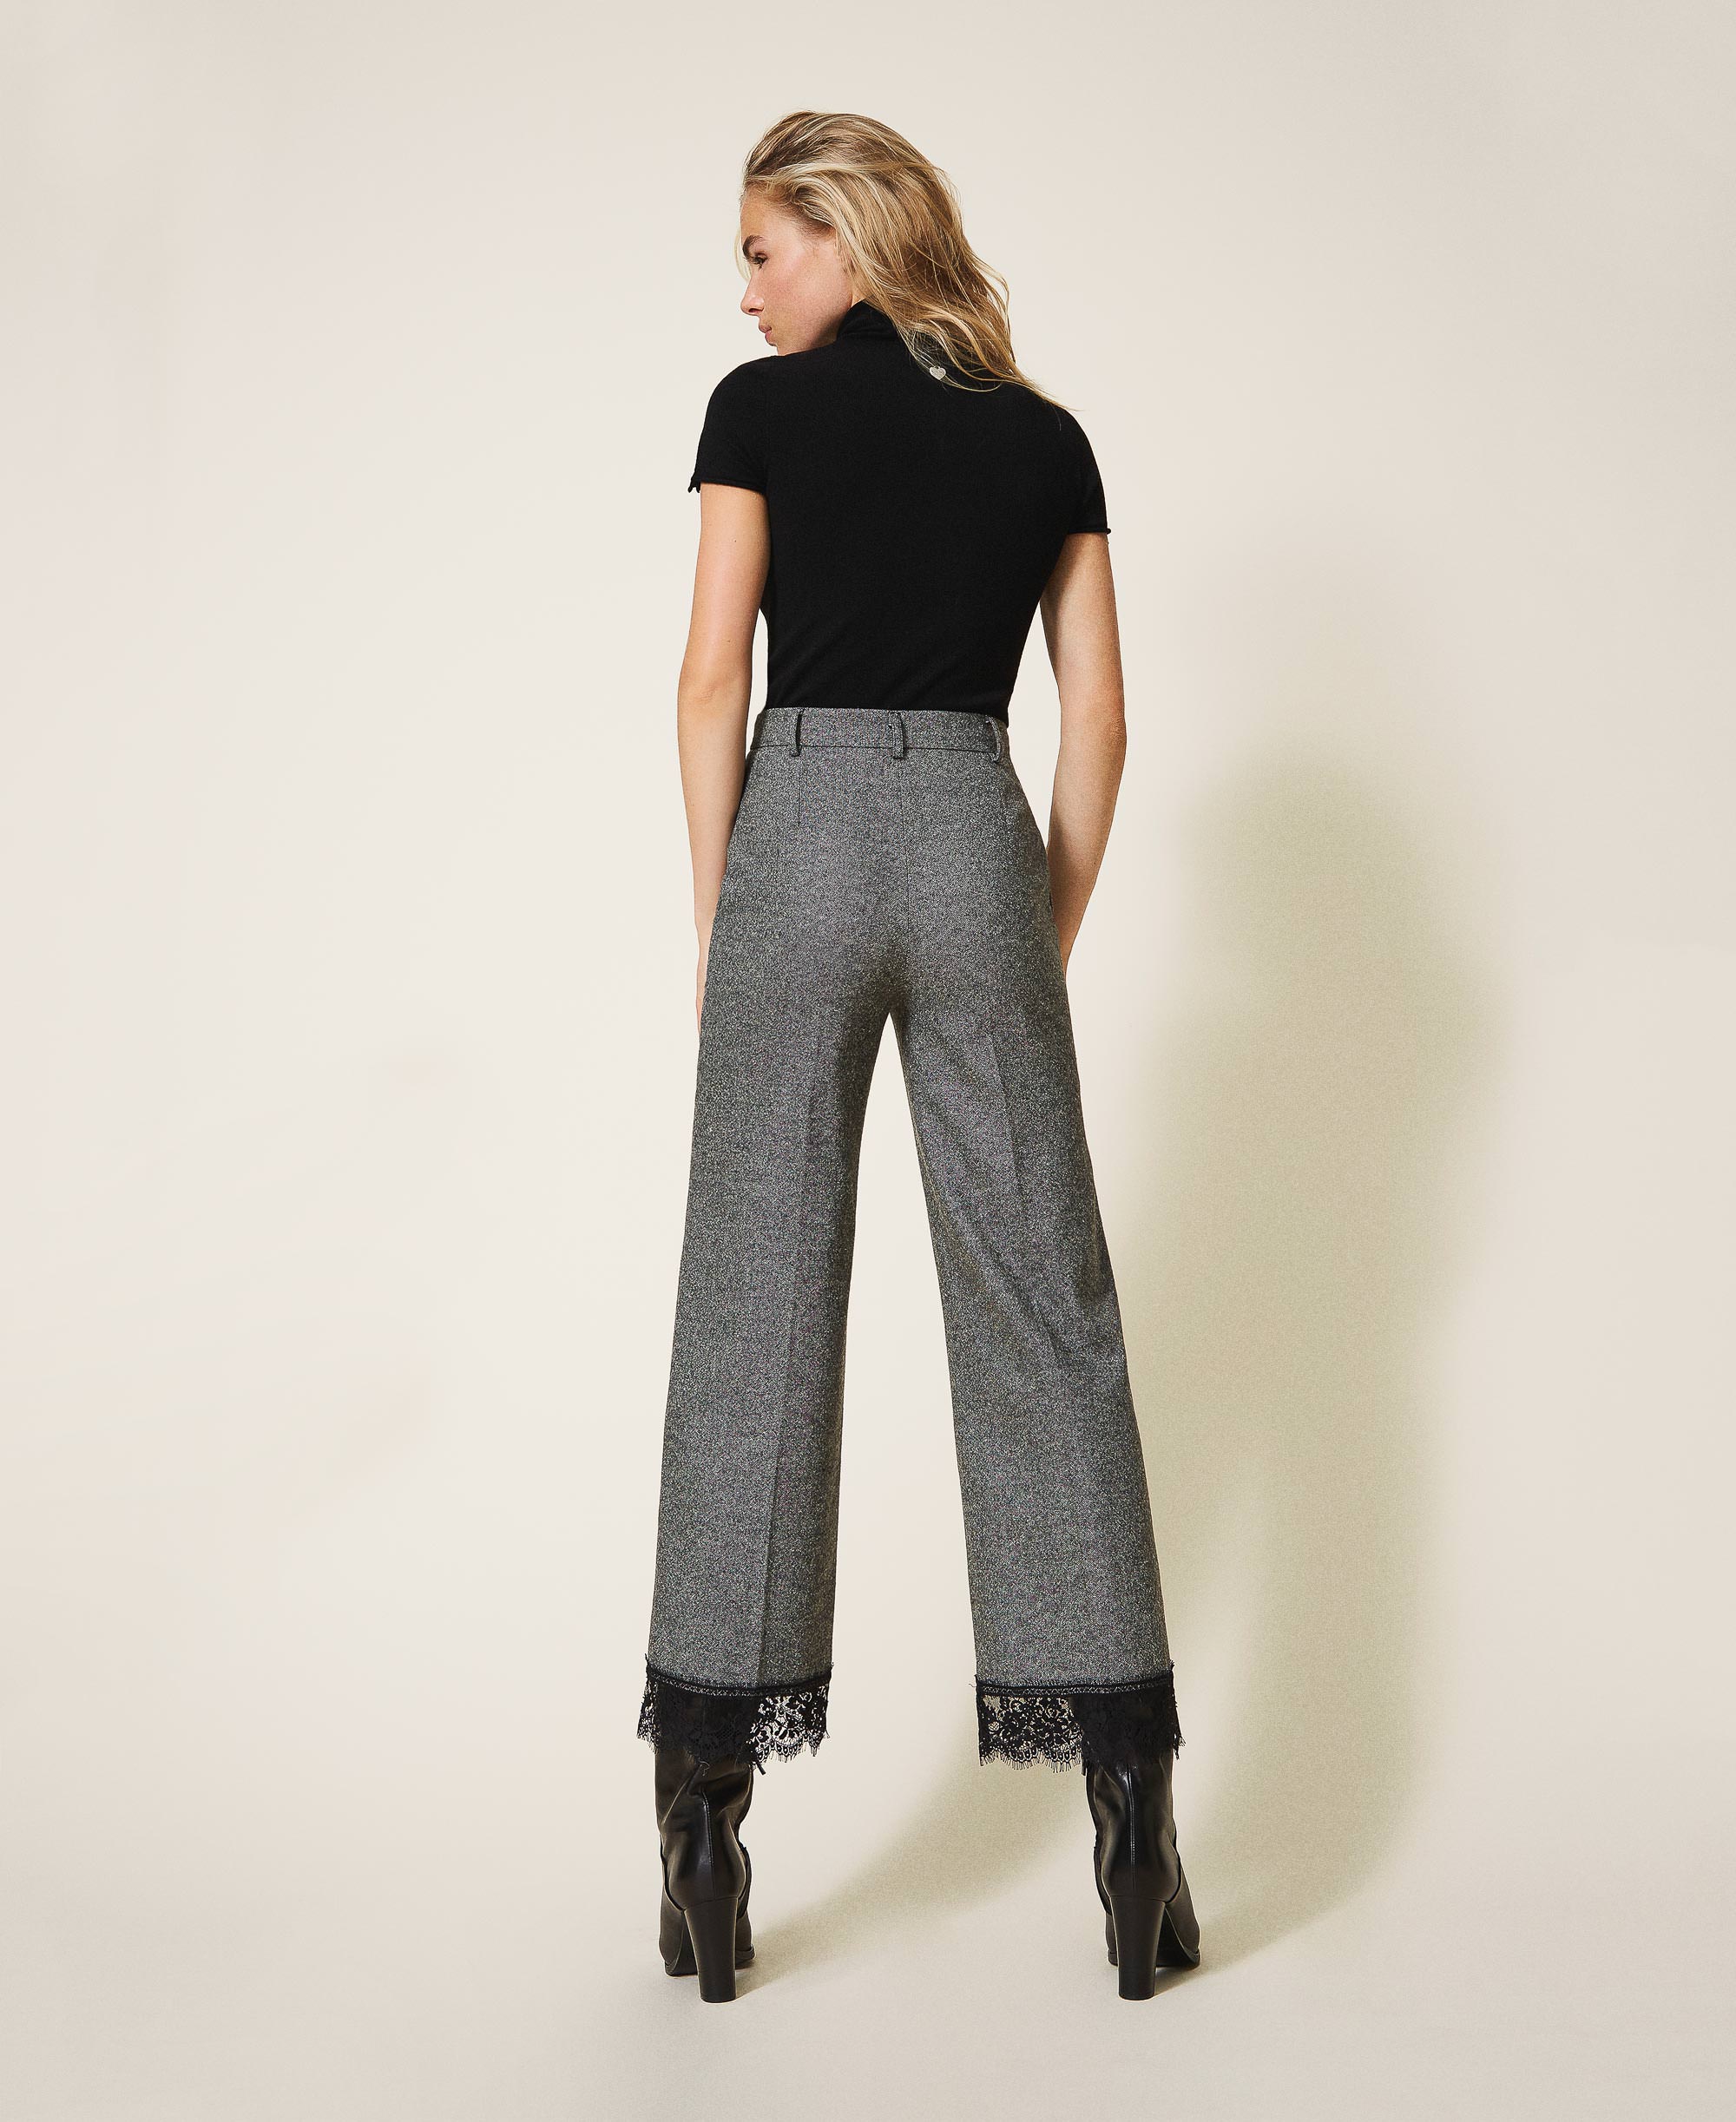 Pantaloni Cropped In Lana Luisaviaroma Donna Abbigliamento Pantaloni e jeans Pantaloni Pantaloni eleganti 